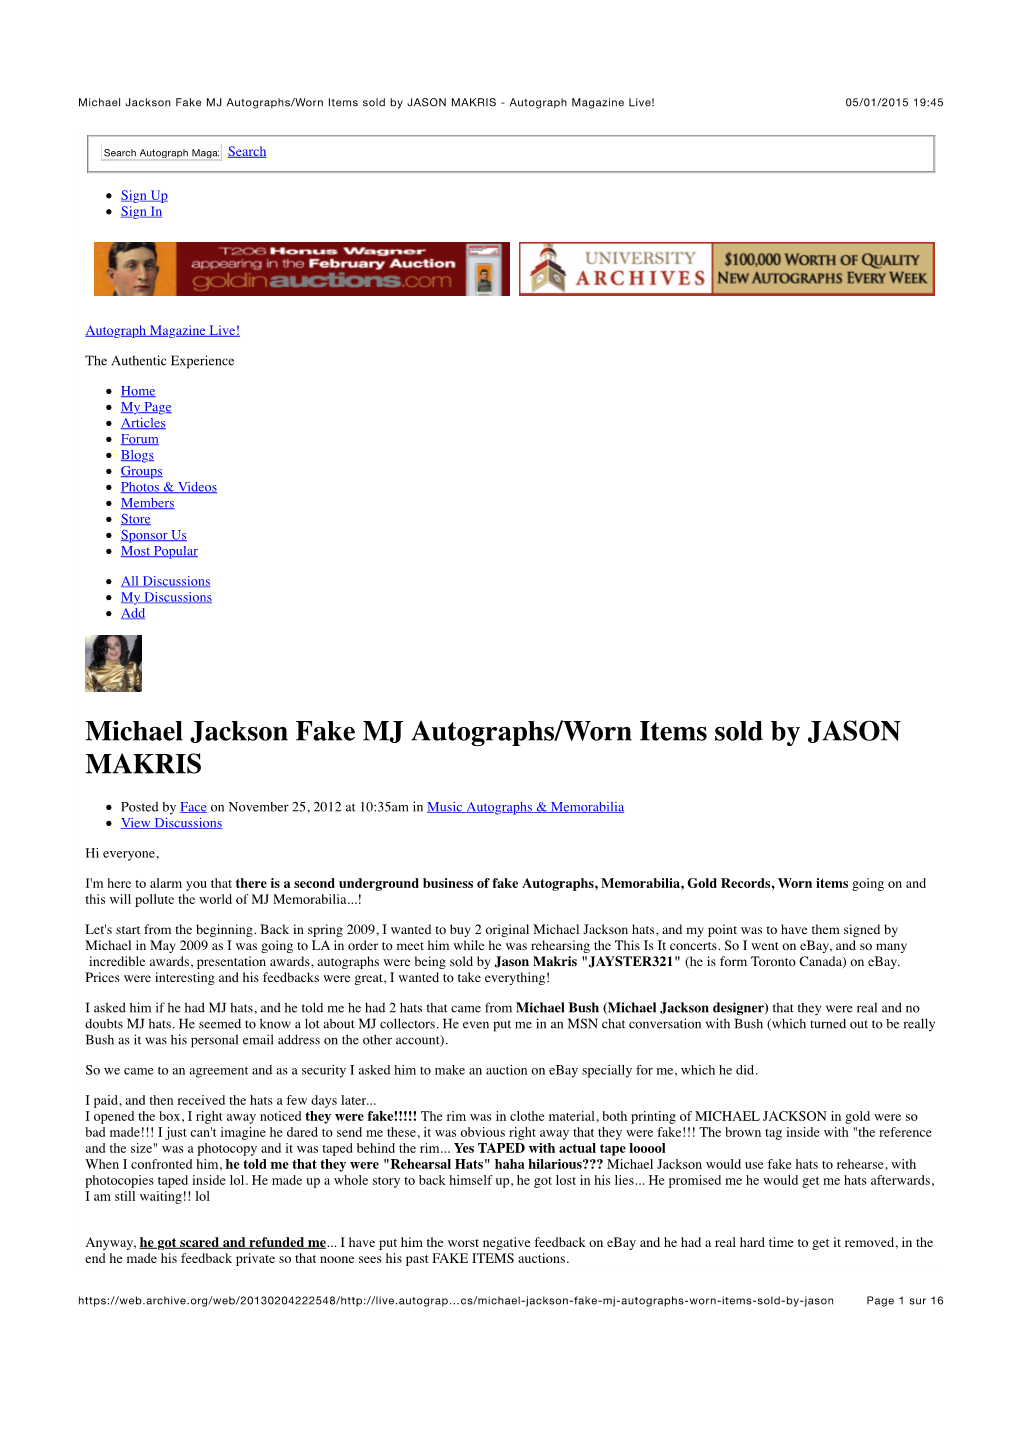 Michael Jackson Fake MJ Autographs/Worn Items Sold by JASON MAKRIS - Autograph Magazine Live! 05/01/2015 19:45